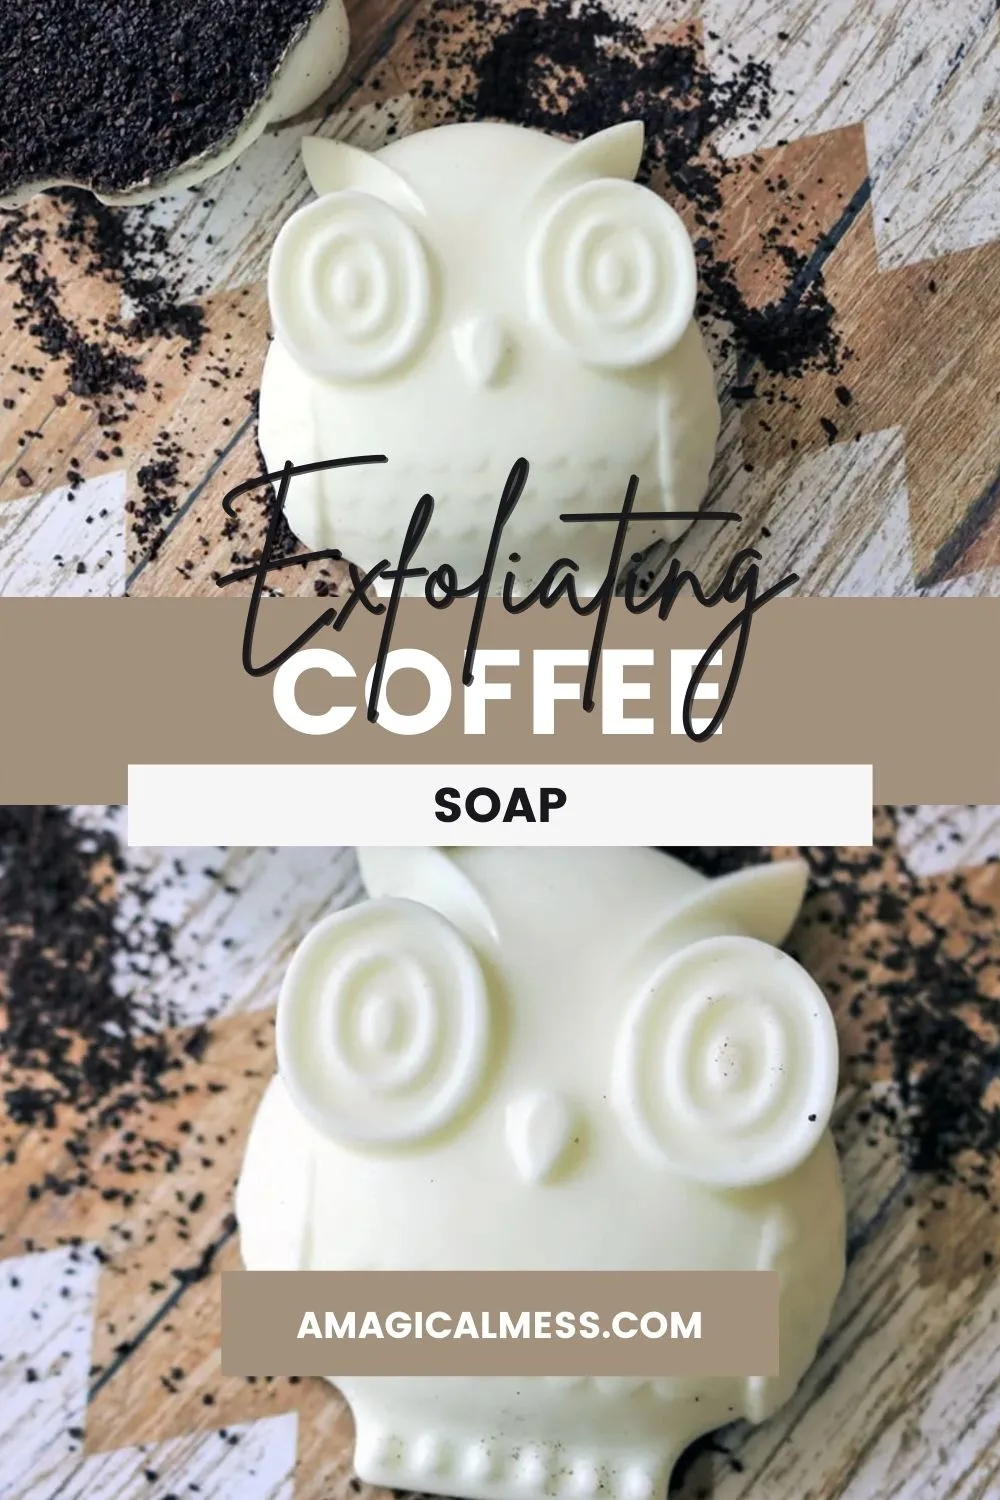 Owl shaped coffee soap.